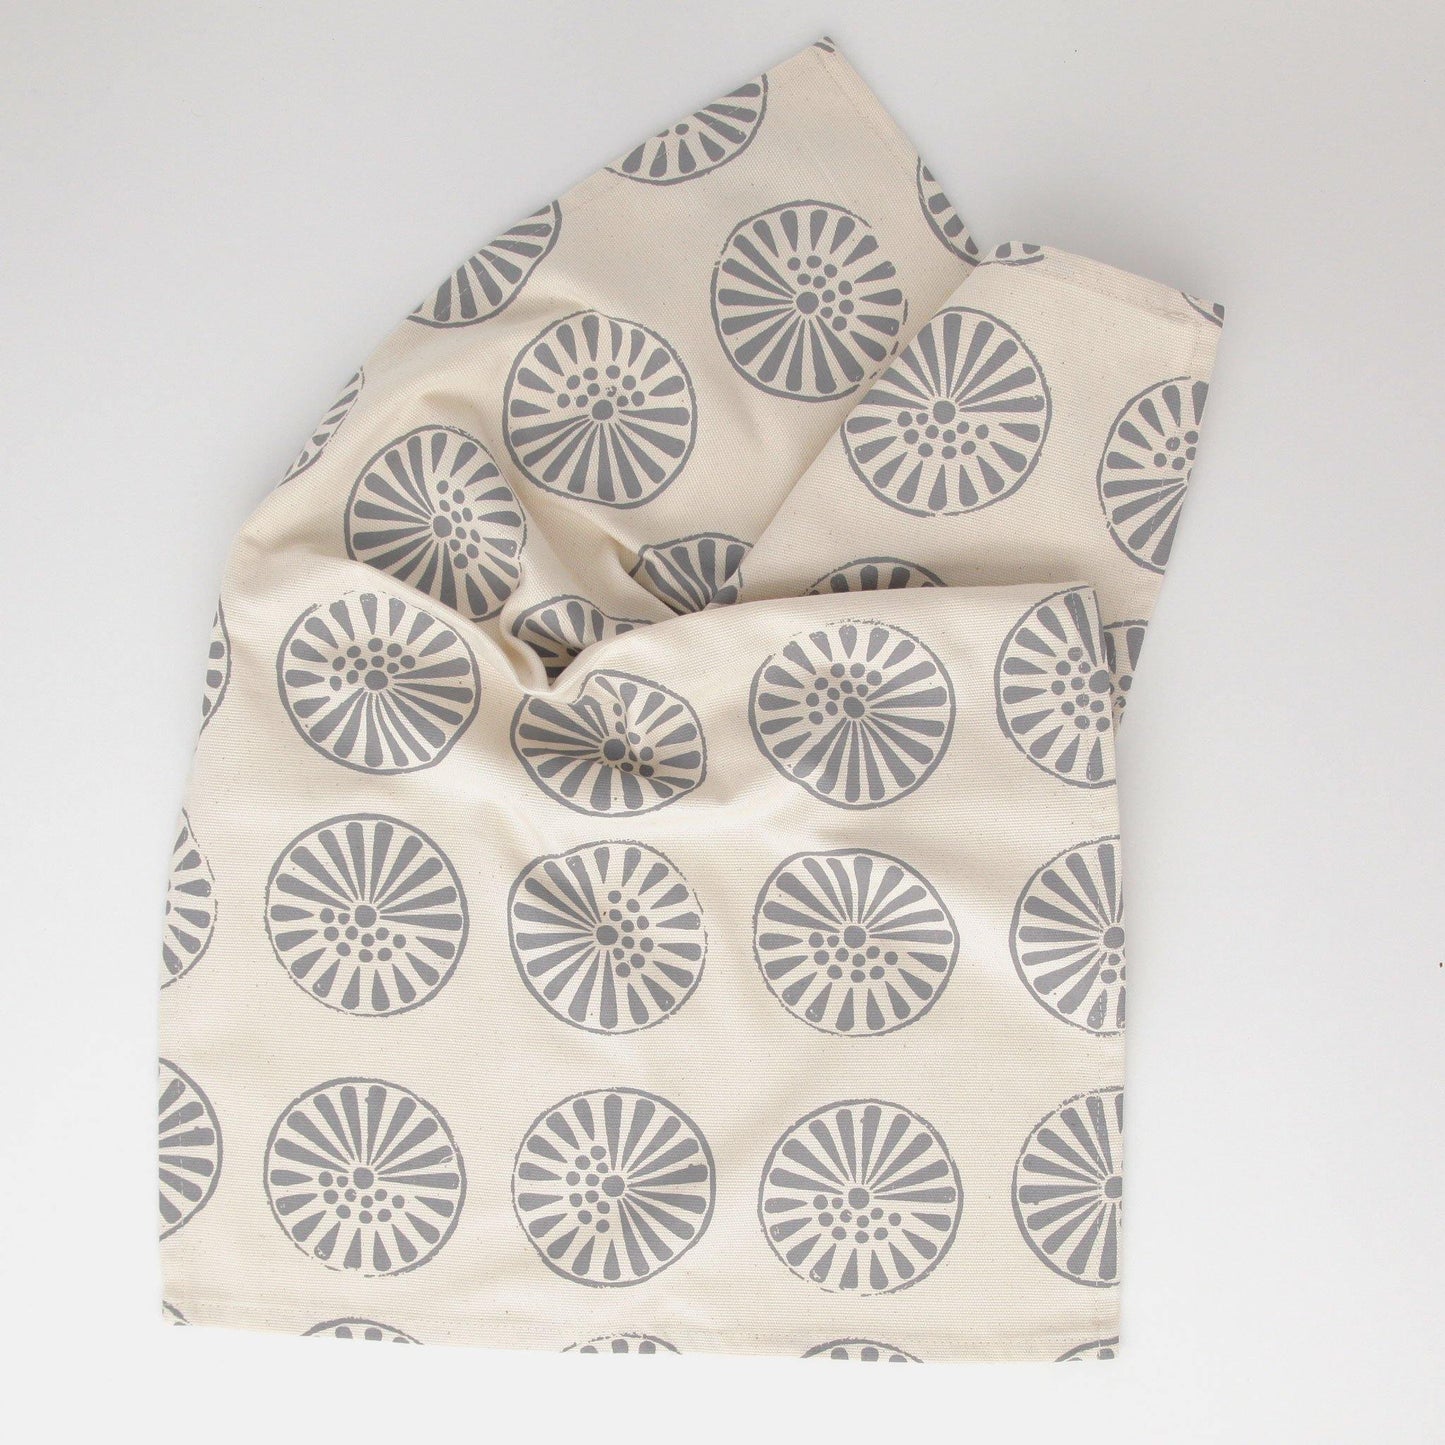 Tea Towel Pincushion Print | thick and absorbent towel